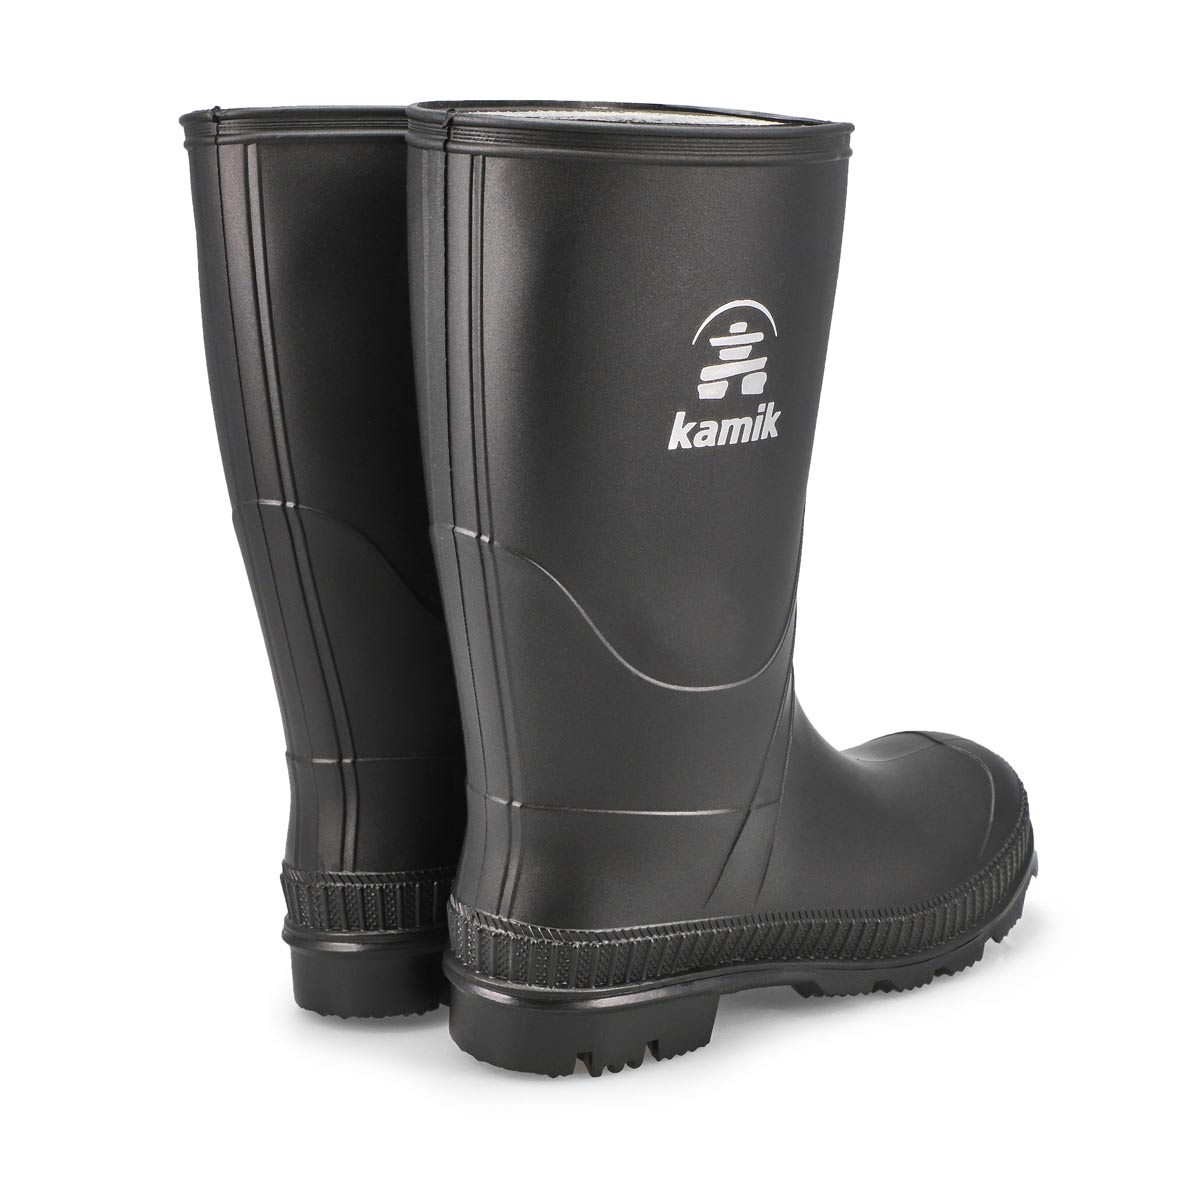 Boys' Stomp Waterproof Rain Boot - Black